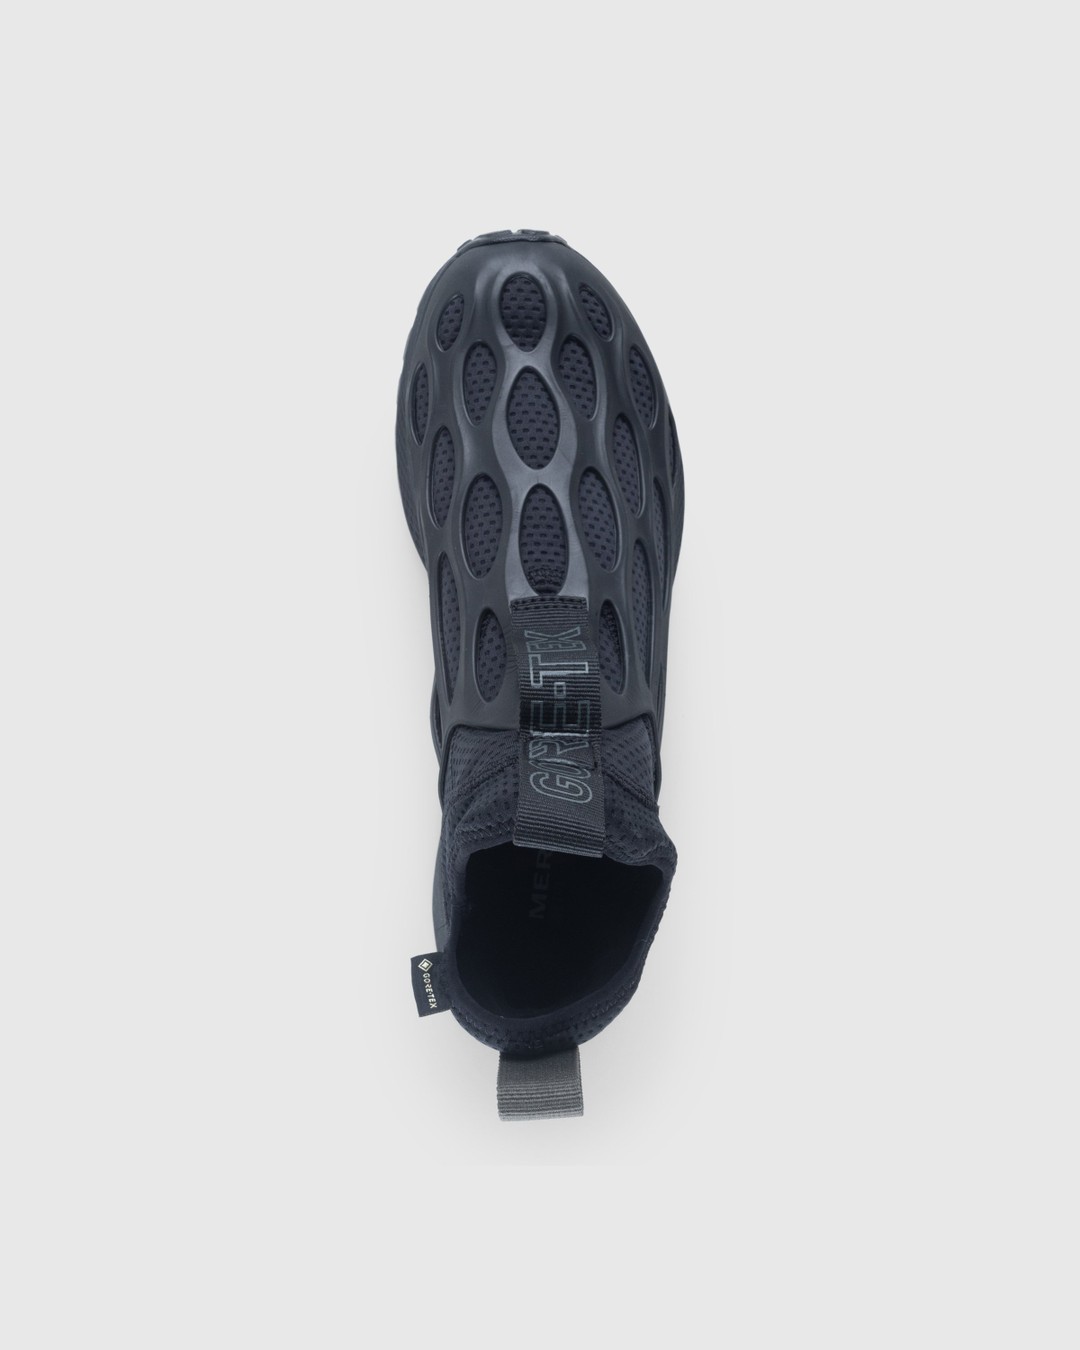 Merrell – Hydro Runner Mid GTX Black  - Sneakers - Black - Image 5